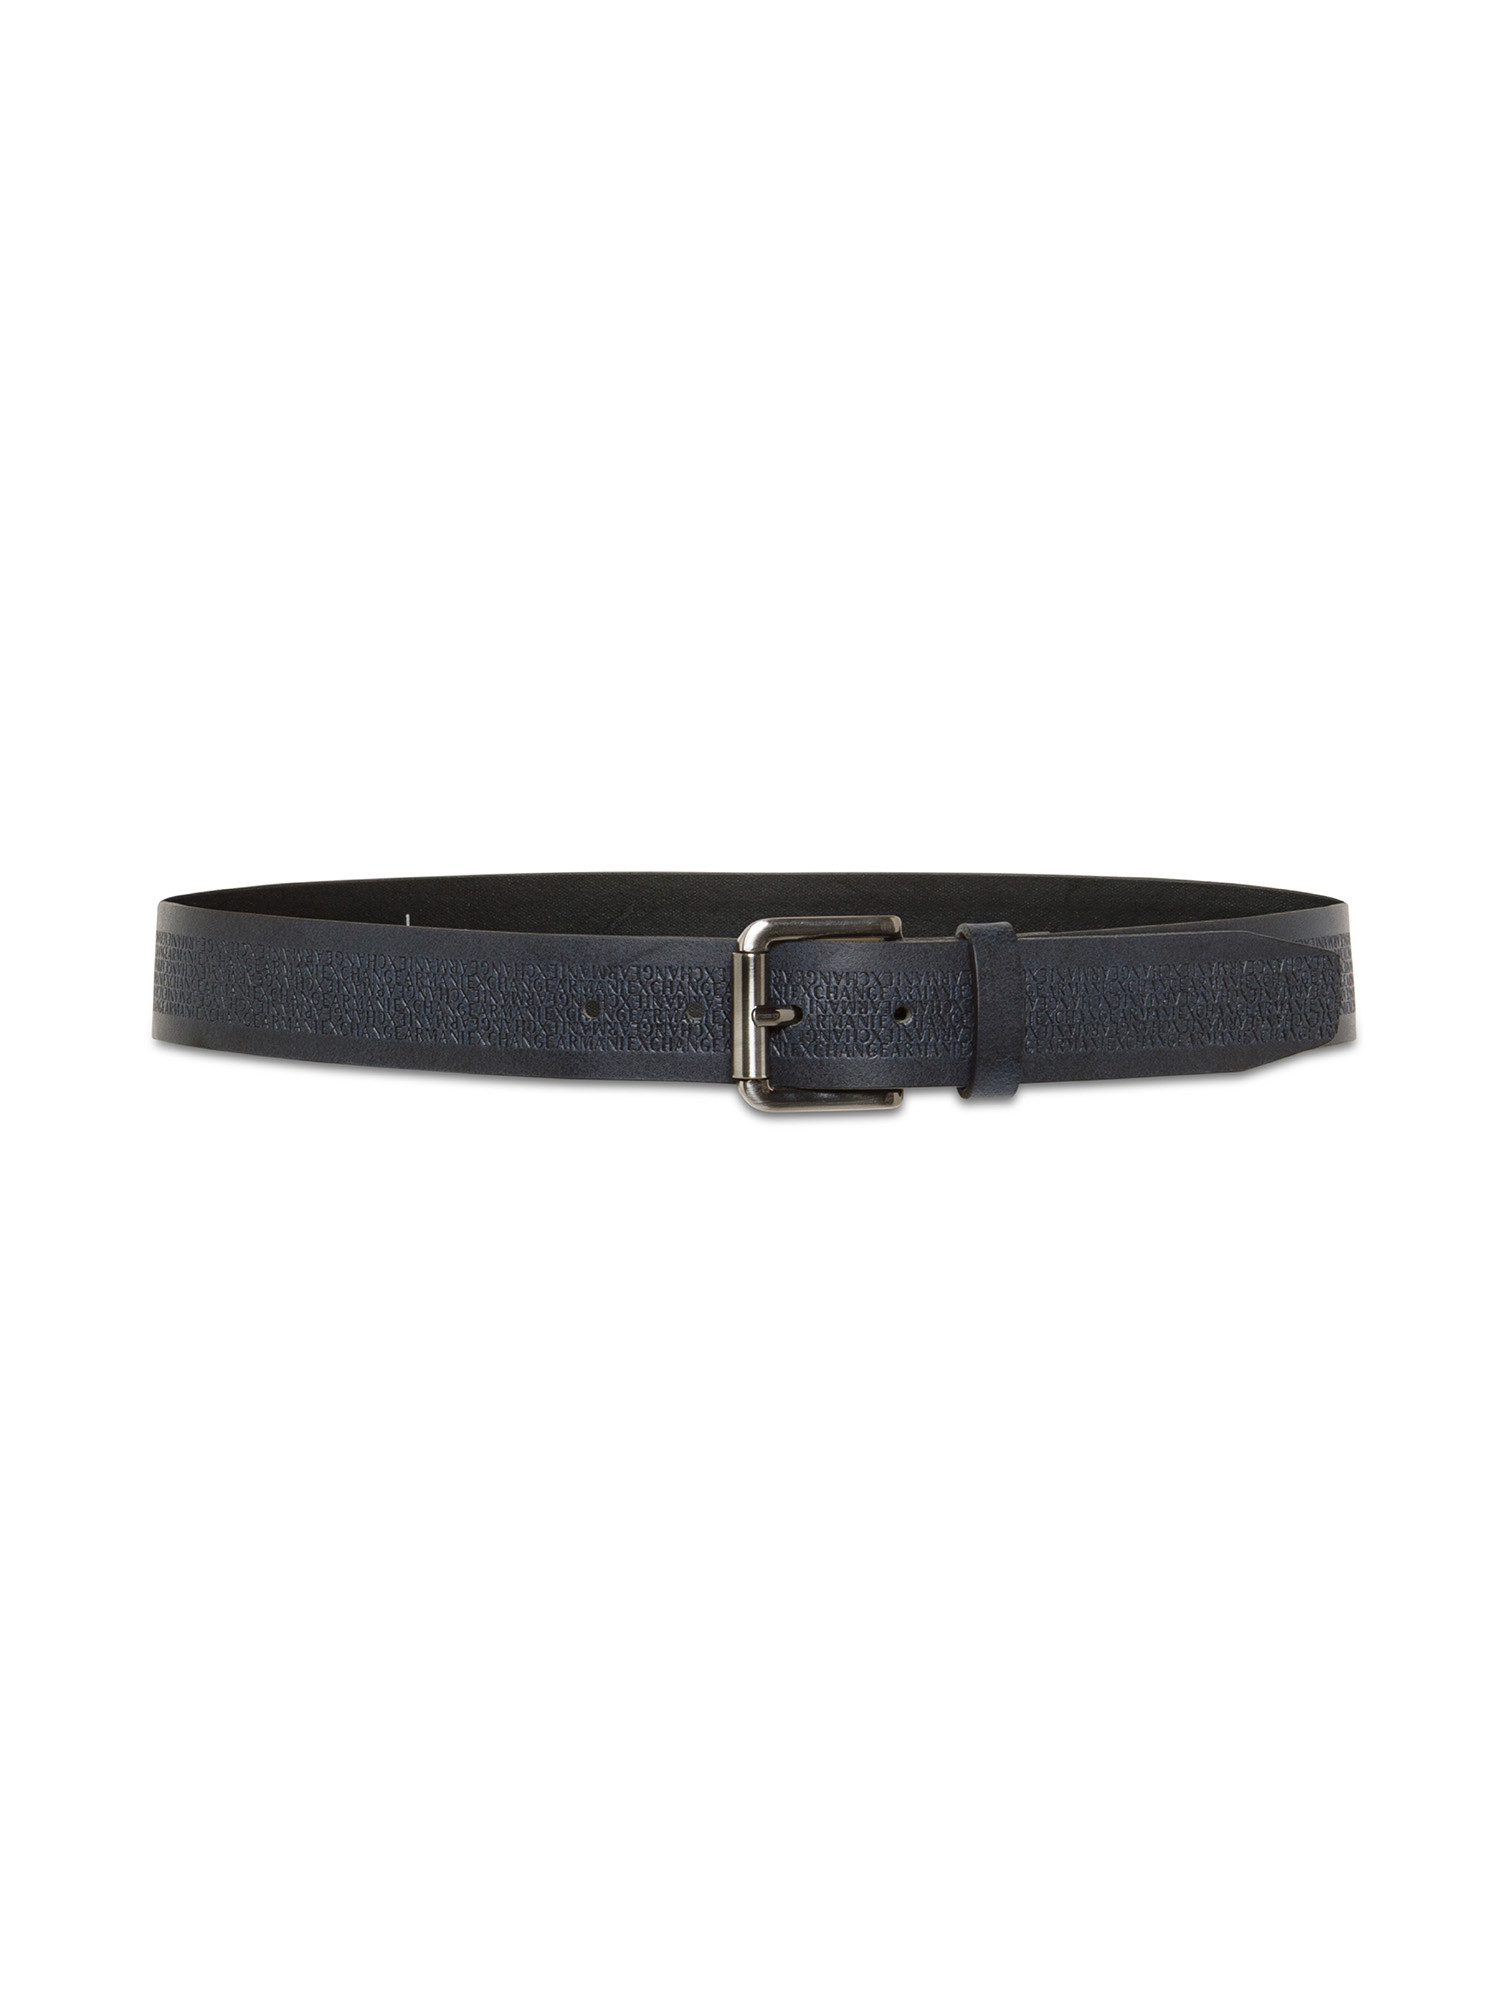 Armani Exchange - Cintura in pelle con logo, Blu scuro, large image number 1